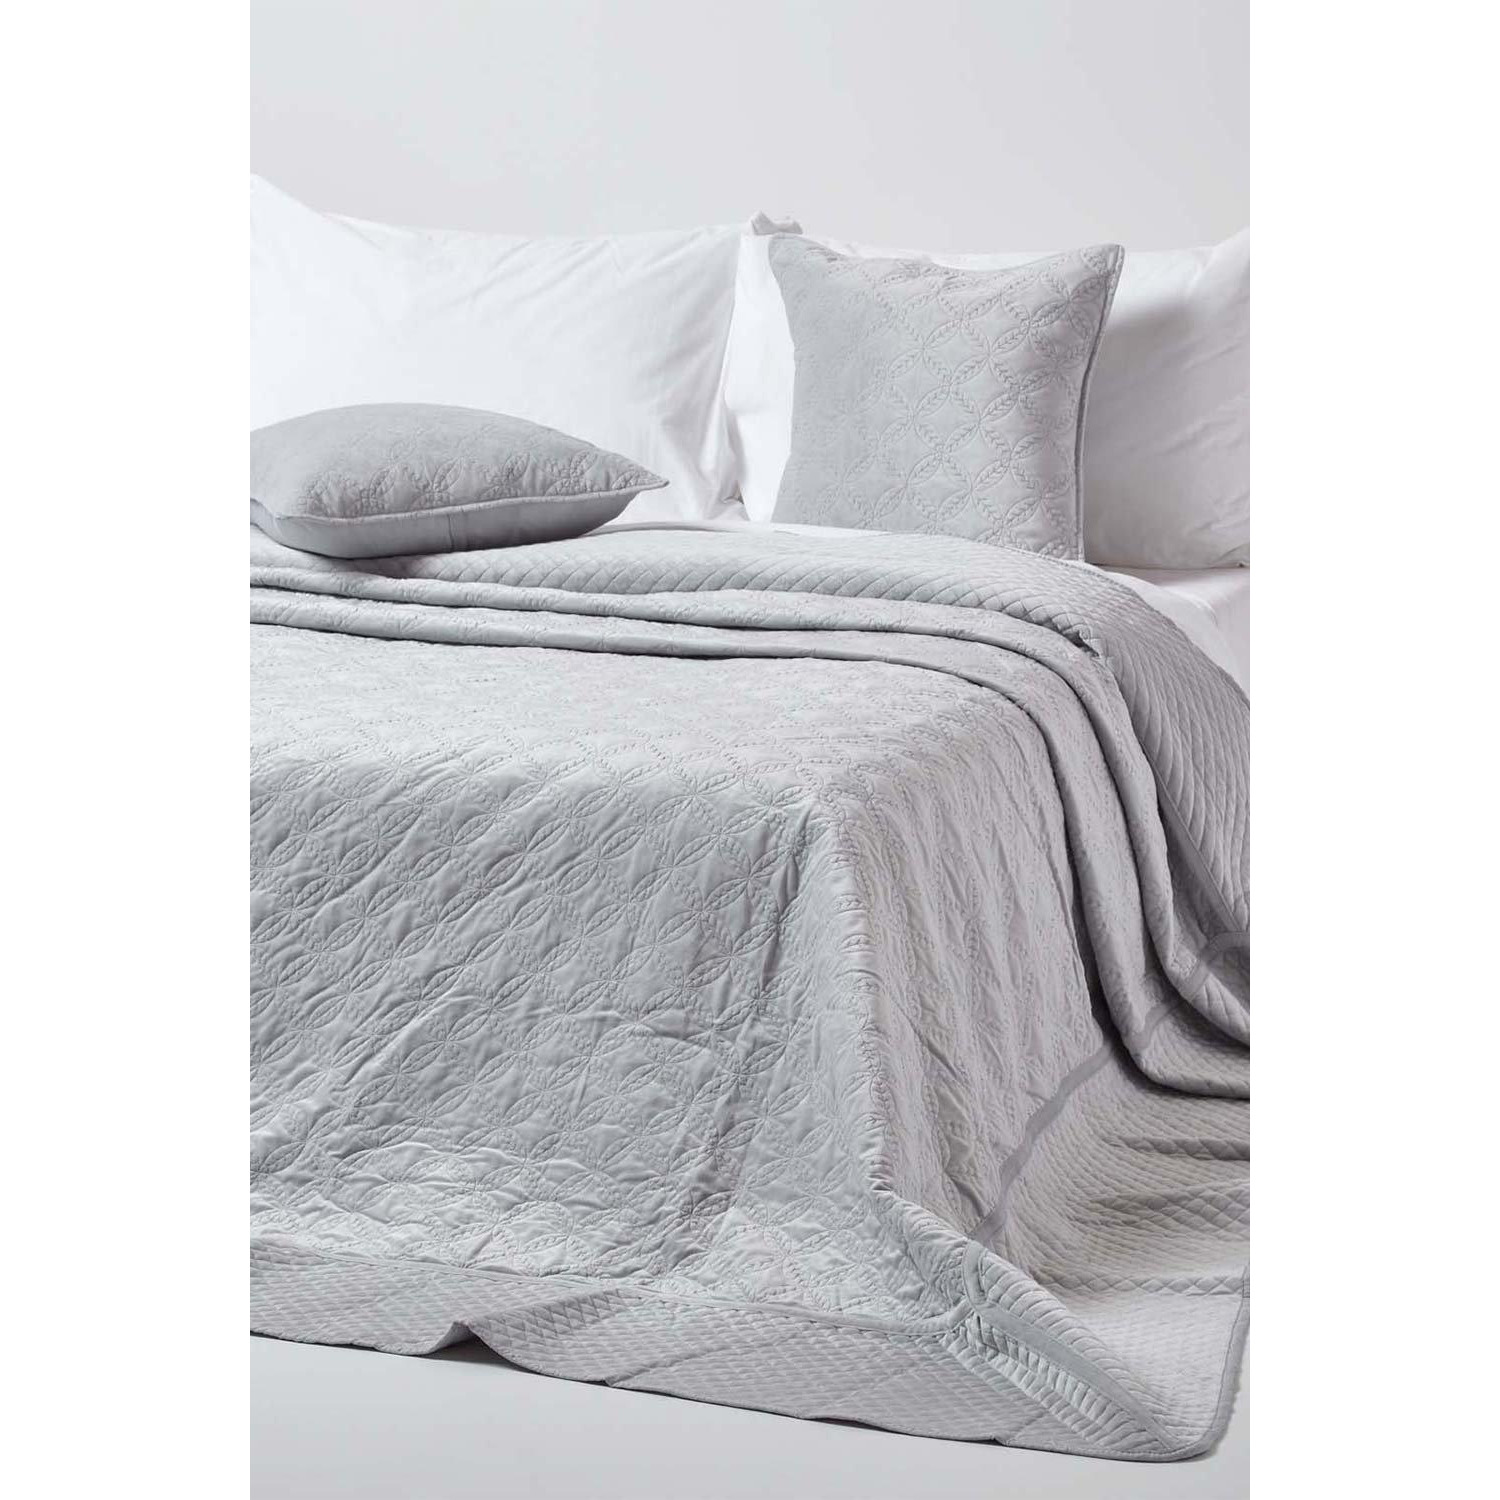 Luxury Quilted Velvet Bedspread Geometric Pattern Throw - image 1